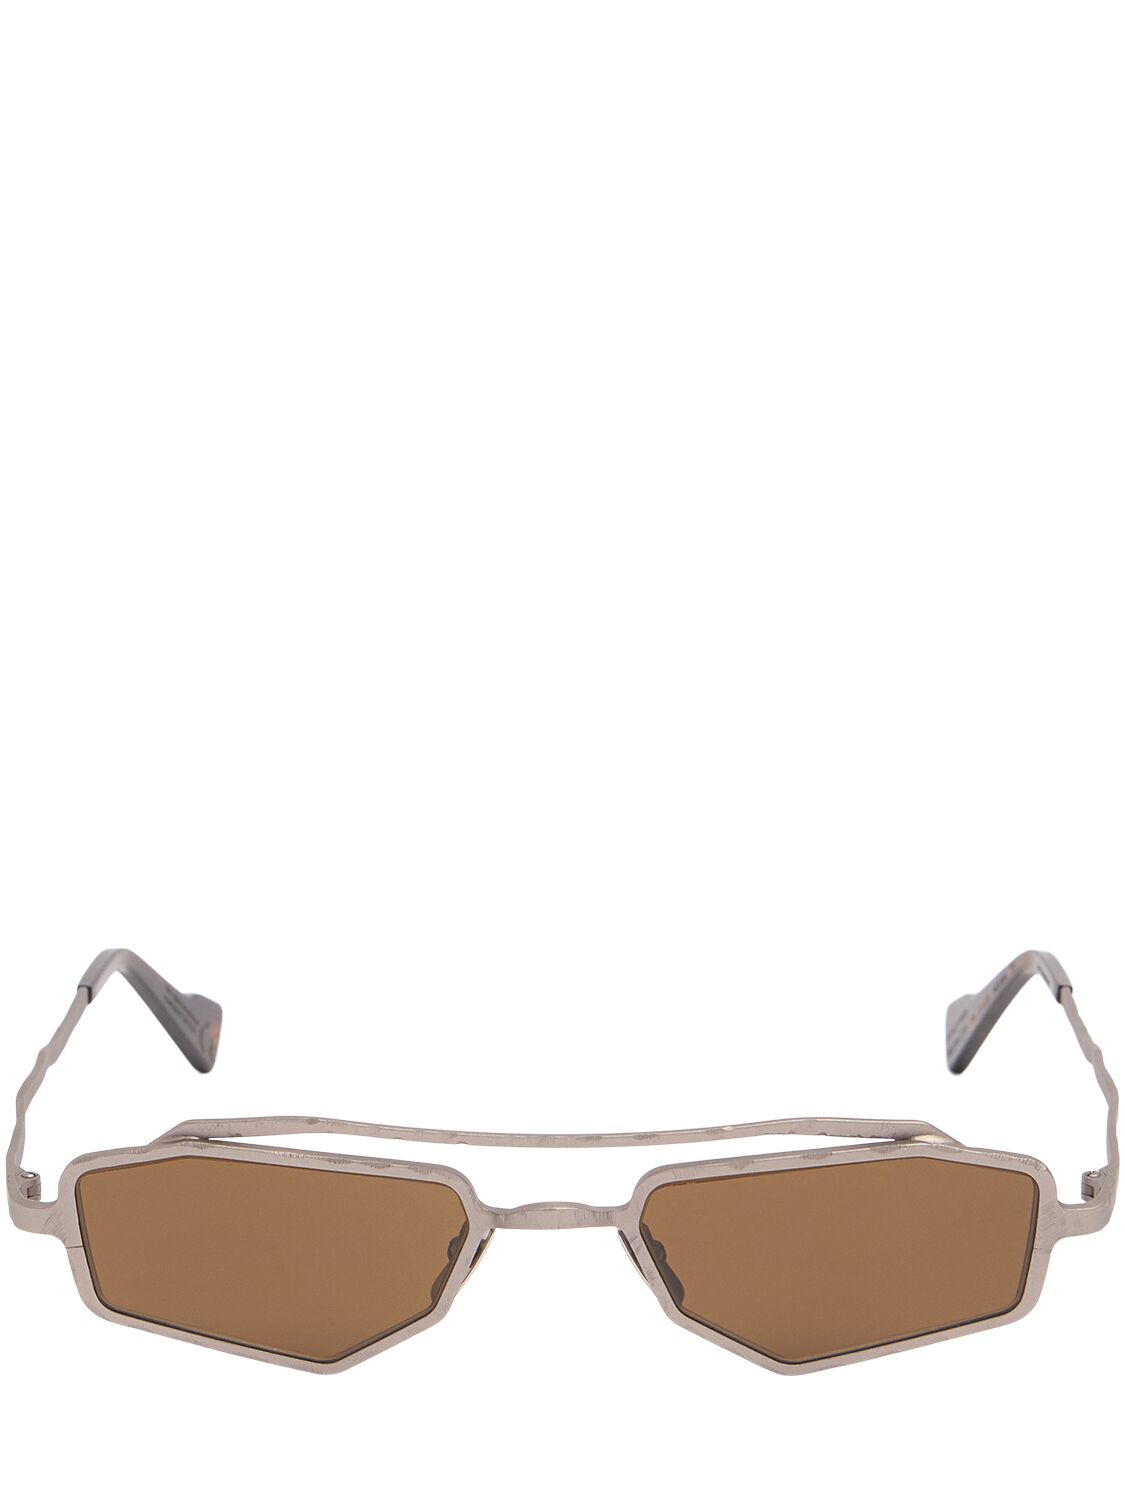 Kuboraum Berlin Z23 Squared Metal Sunglasses In Silver,brown